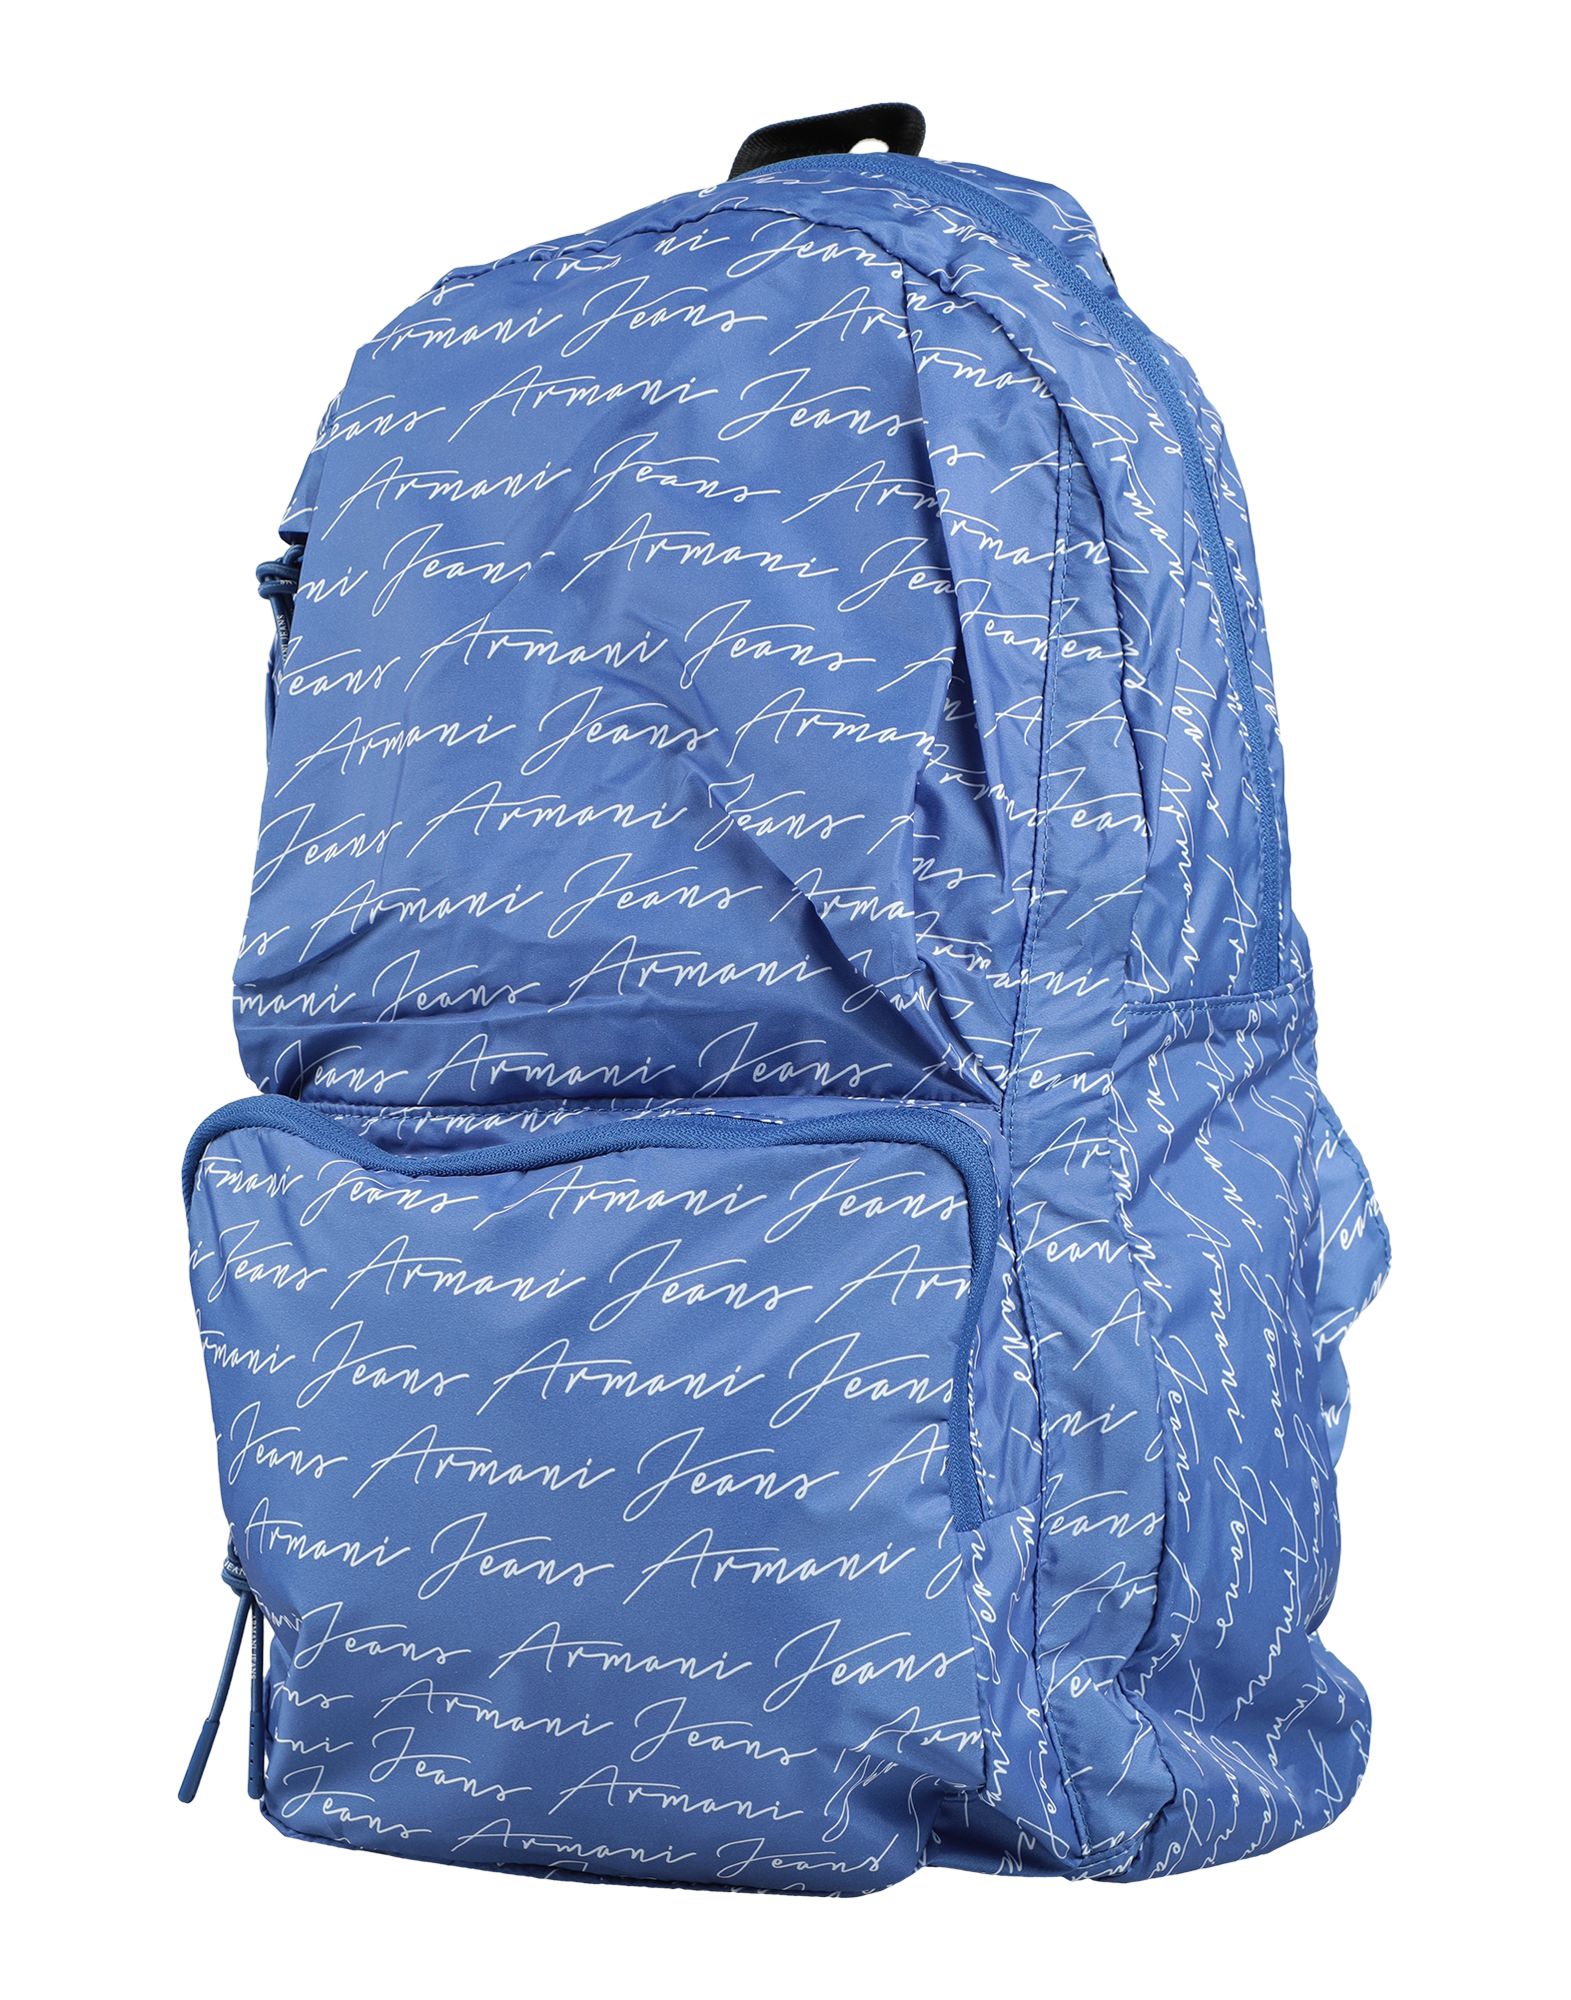 ARMANI JEANS Backpacks & Fanny packs - Item 45501893